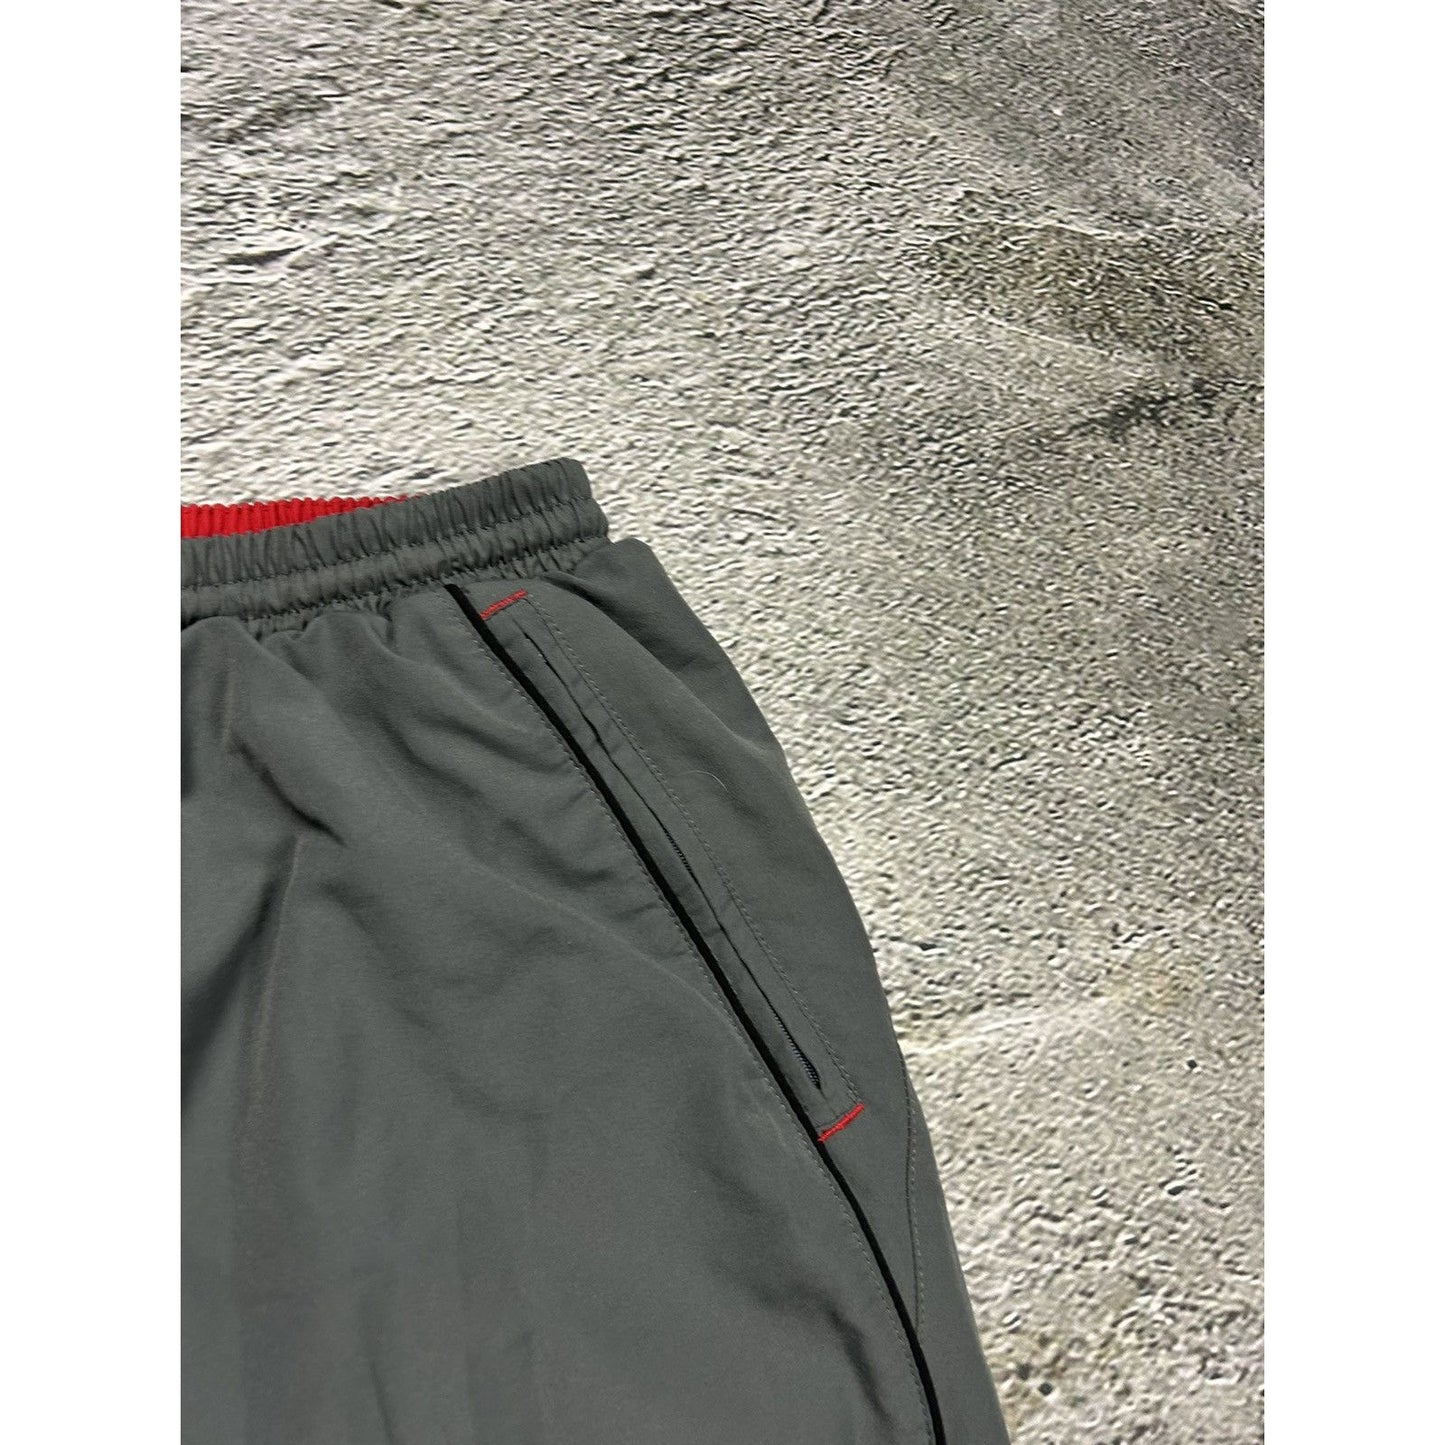 Umbro nylon track pants vintage grey red black Man UTD